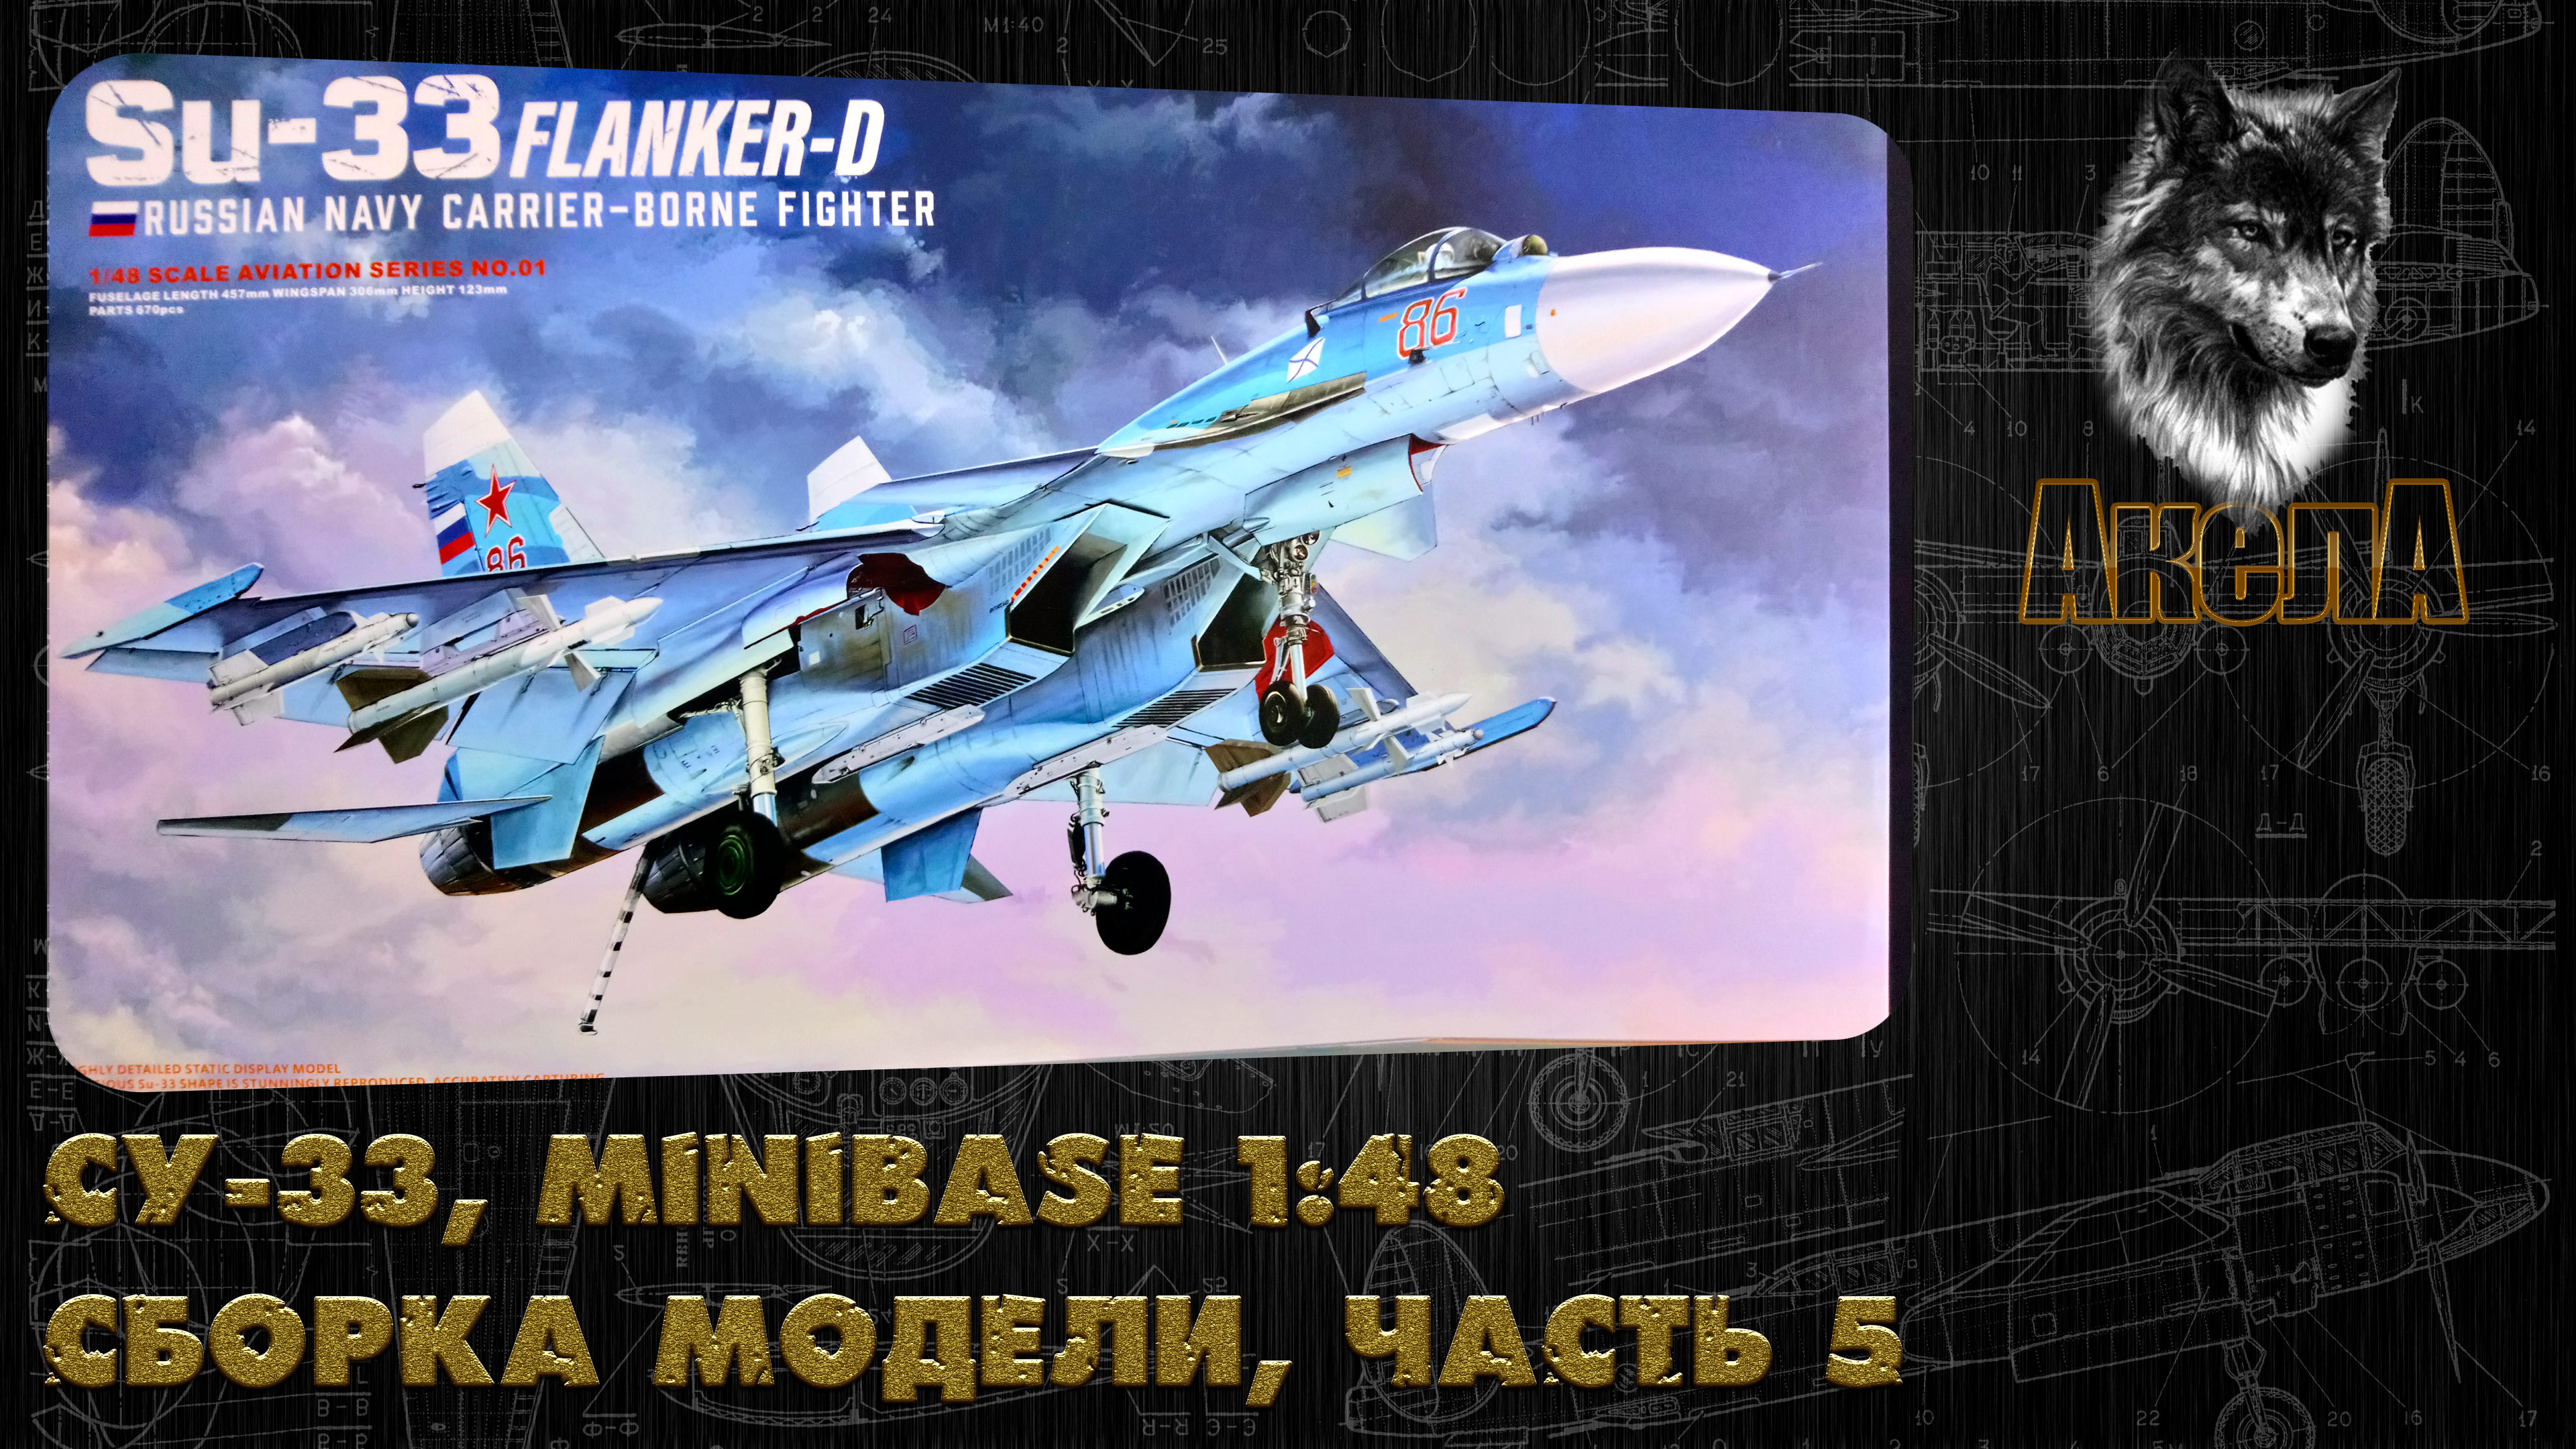 Су-33, Minibase 1/48, сборка модели, часть 5